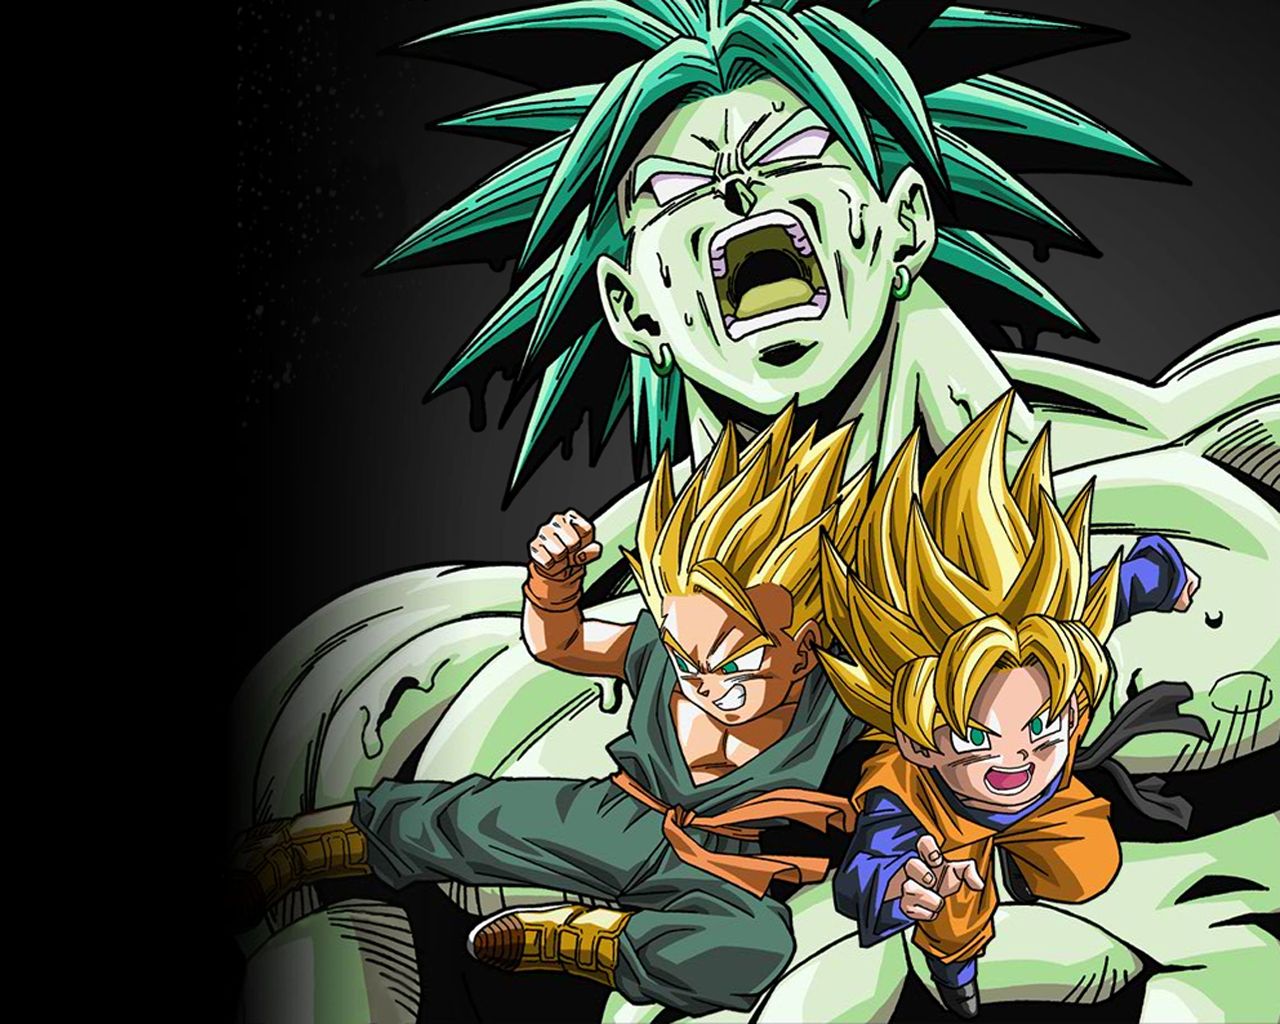 Wallpaper Goku Gohan y Goten Goten Goku Gohan Trunks Background   Download Free Image